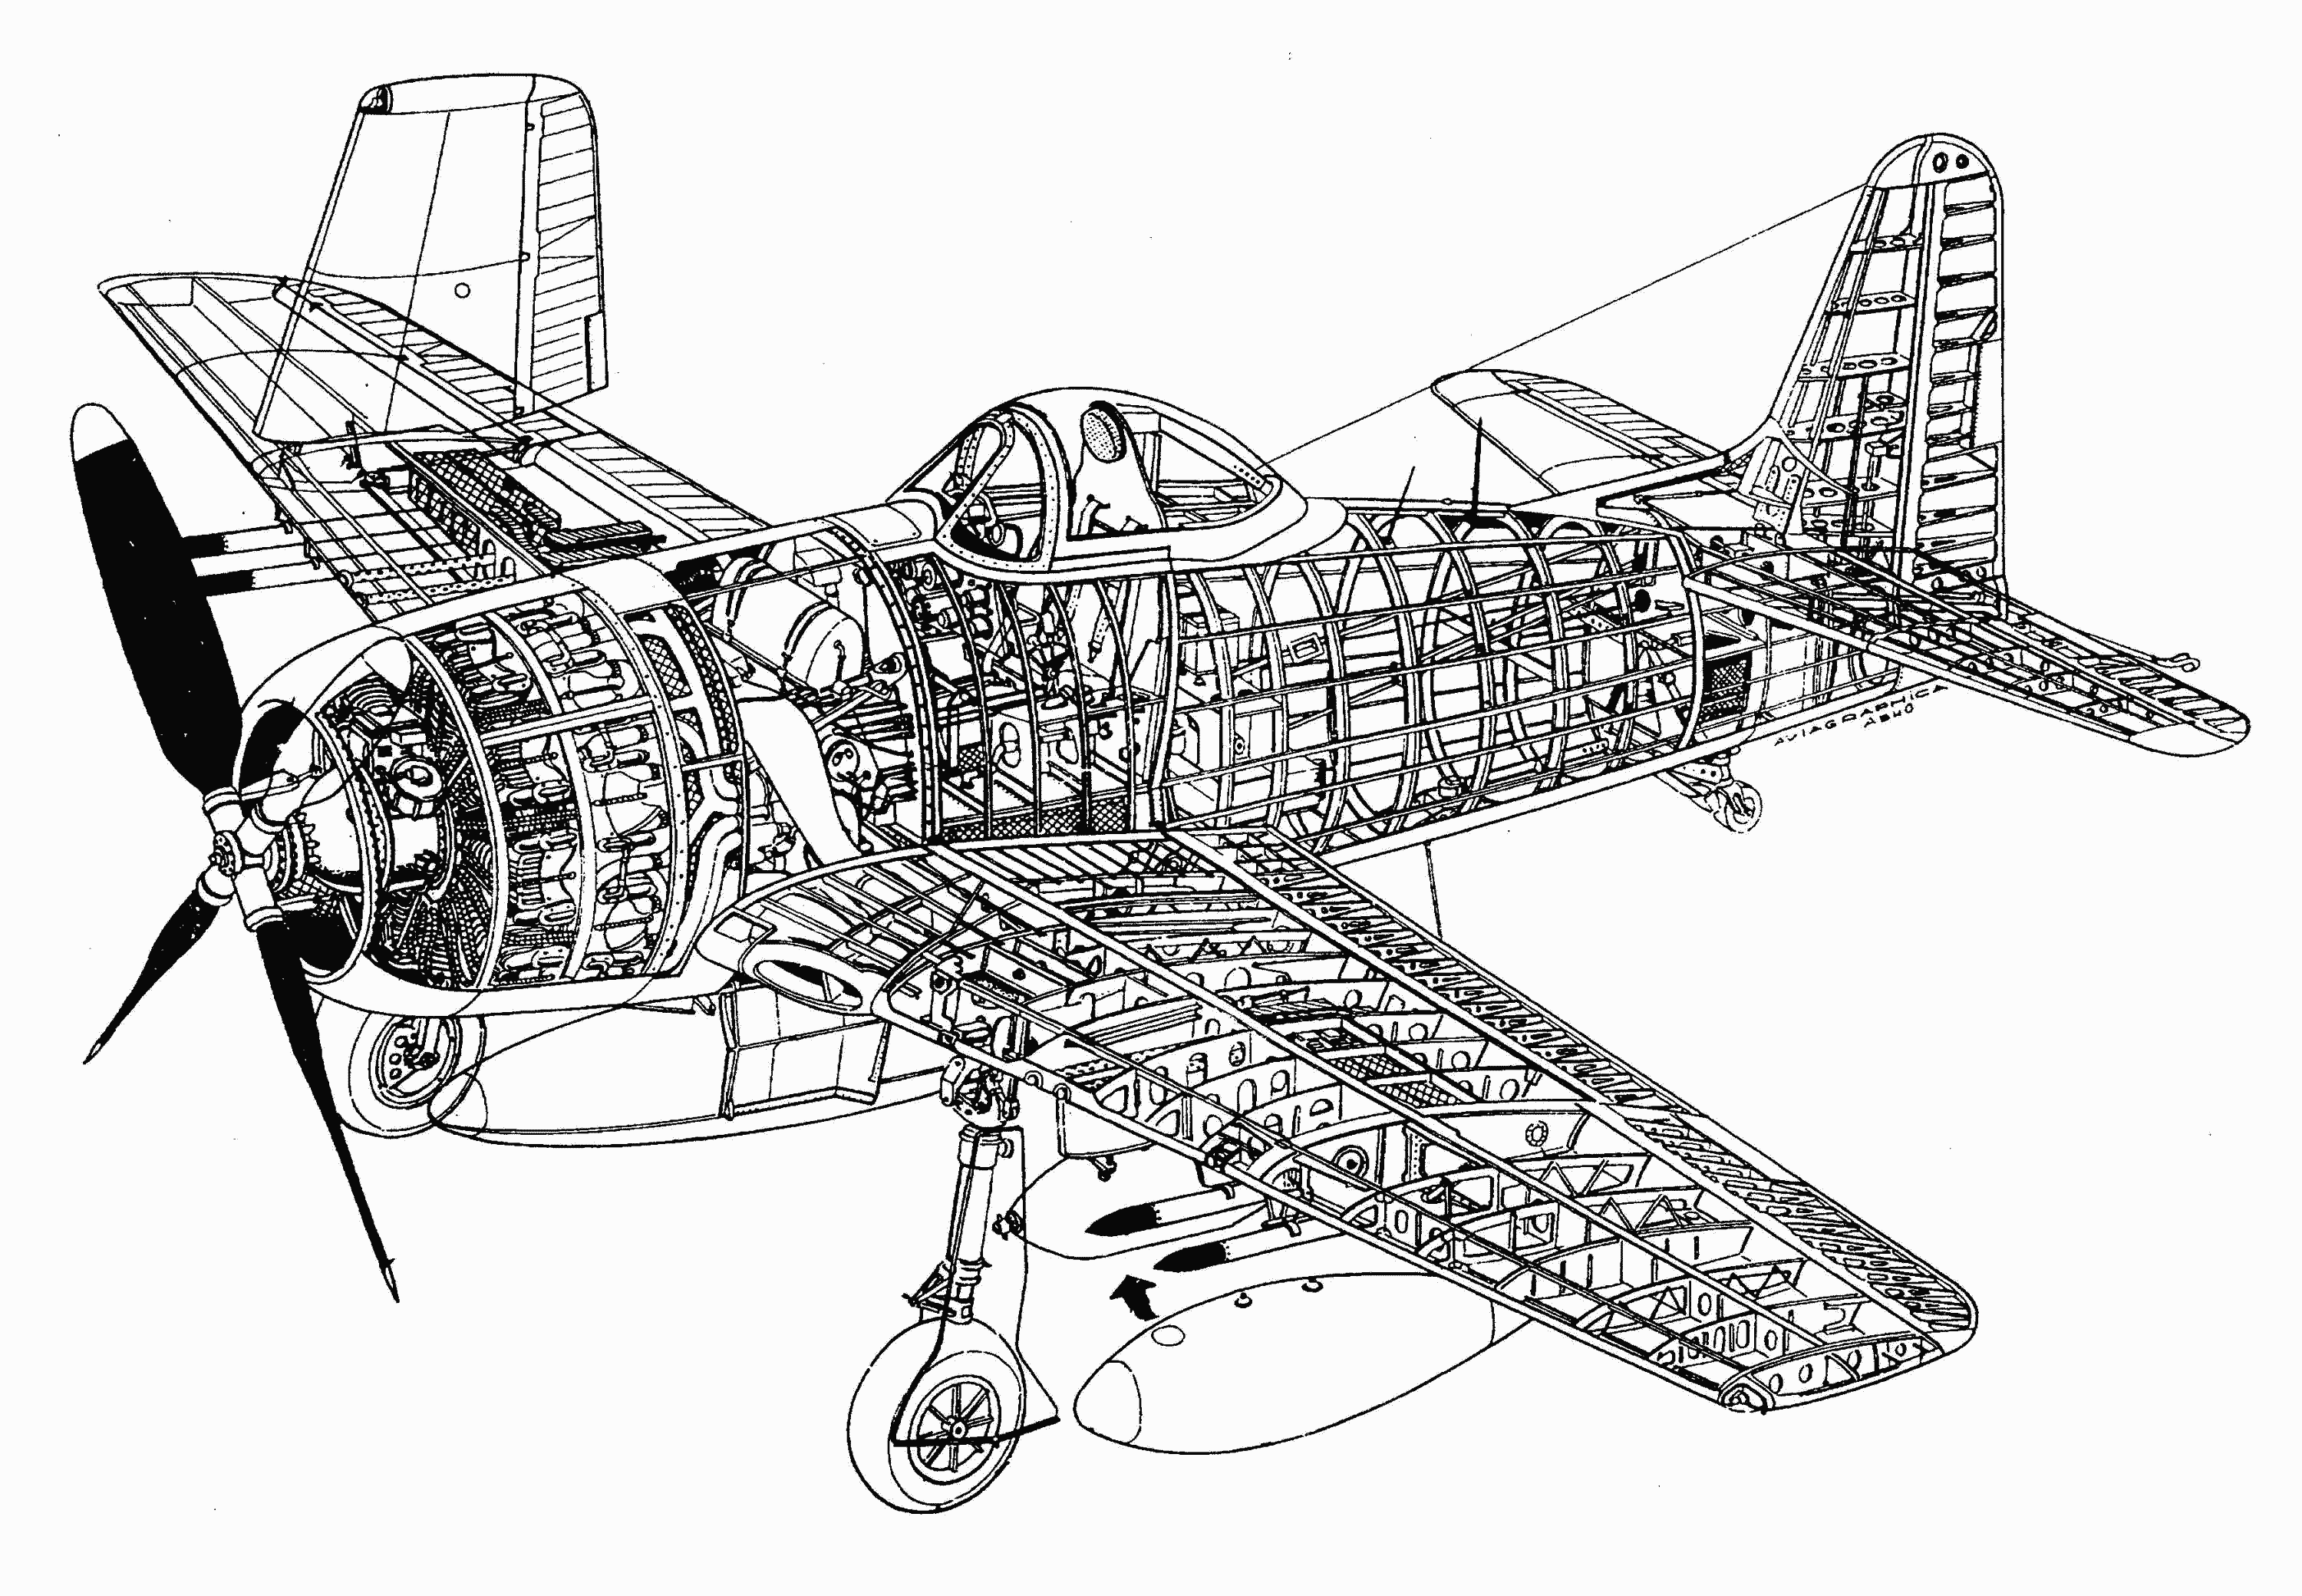 Grumman F8F Bearcat cutaway